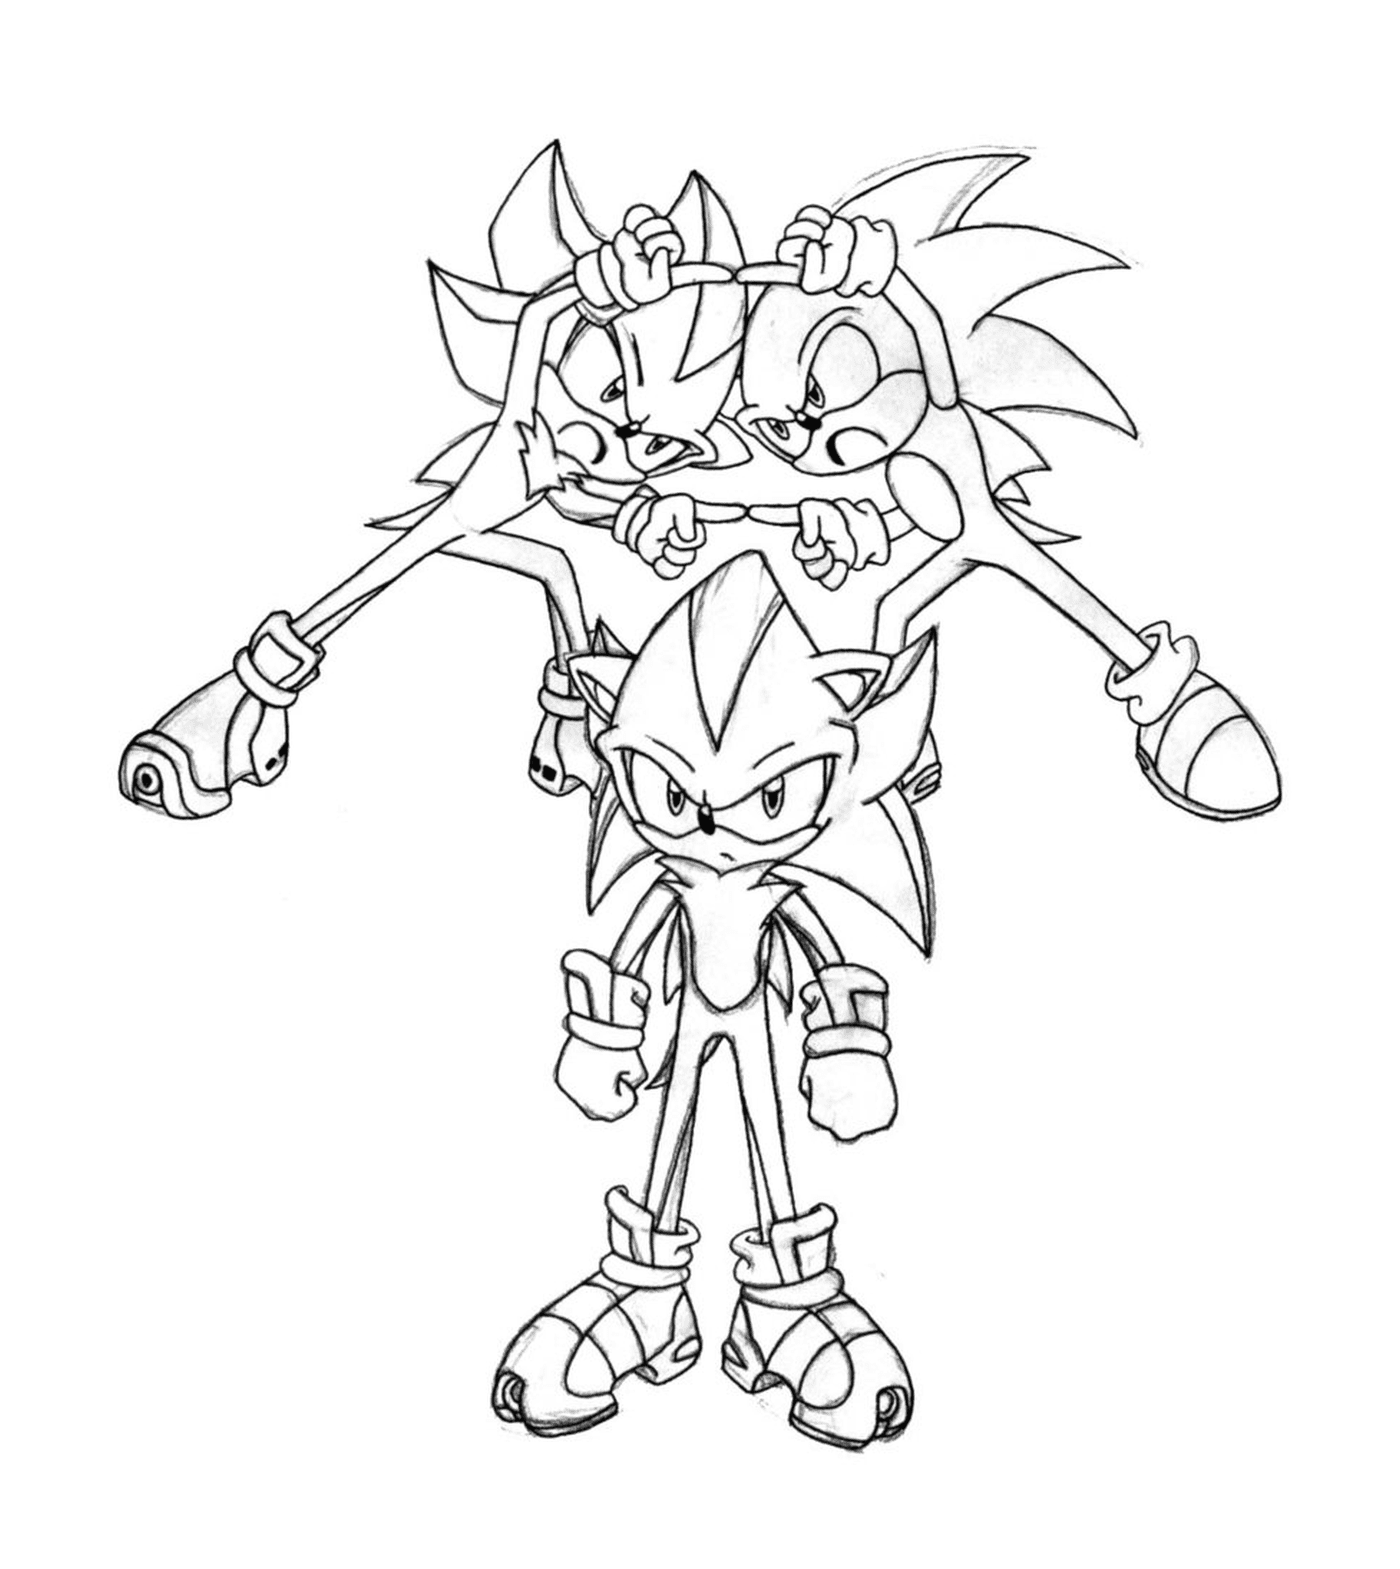   Sonic plein d'énergie 